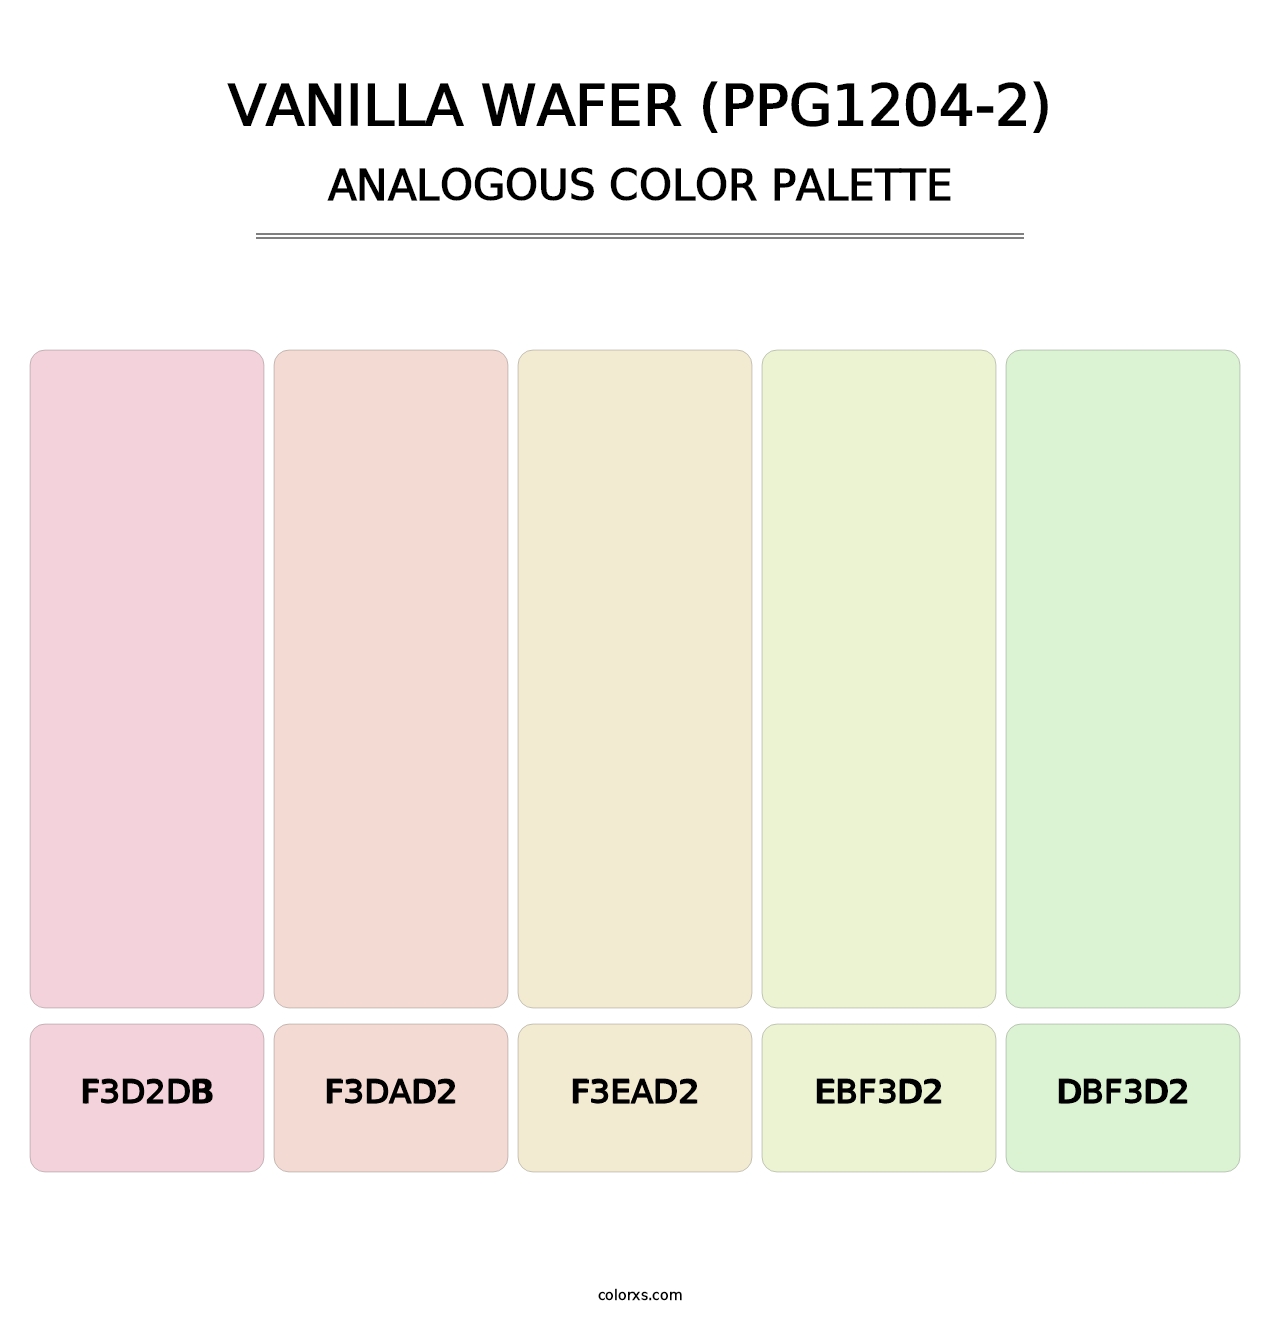 Vanilla Wafer (PPG1204-2) - Analogous Color Palette